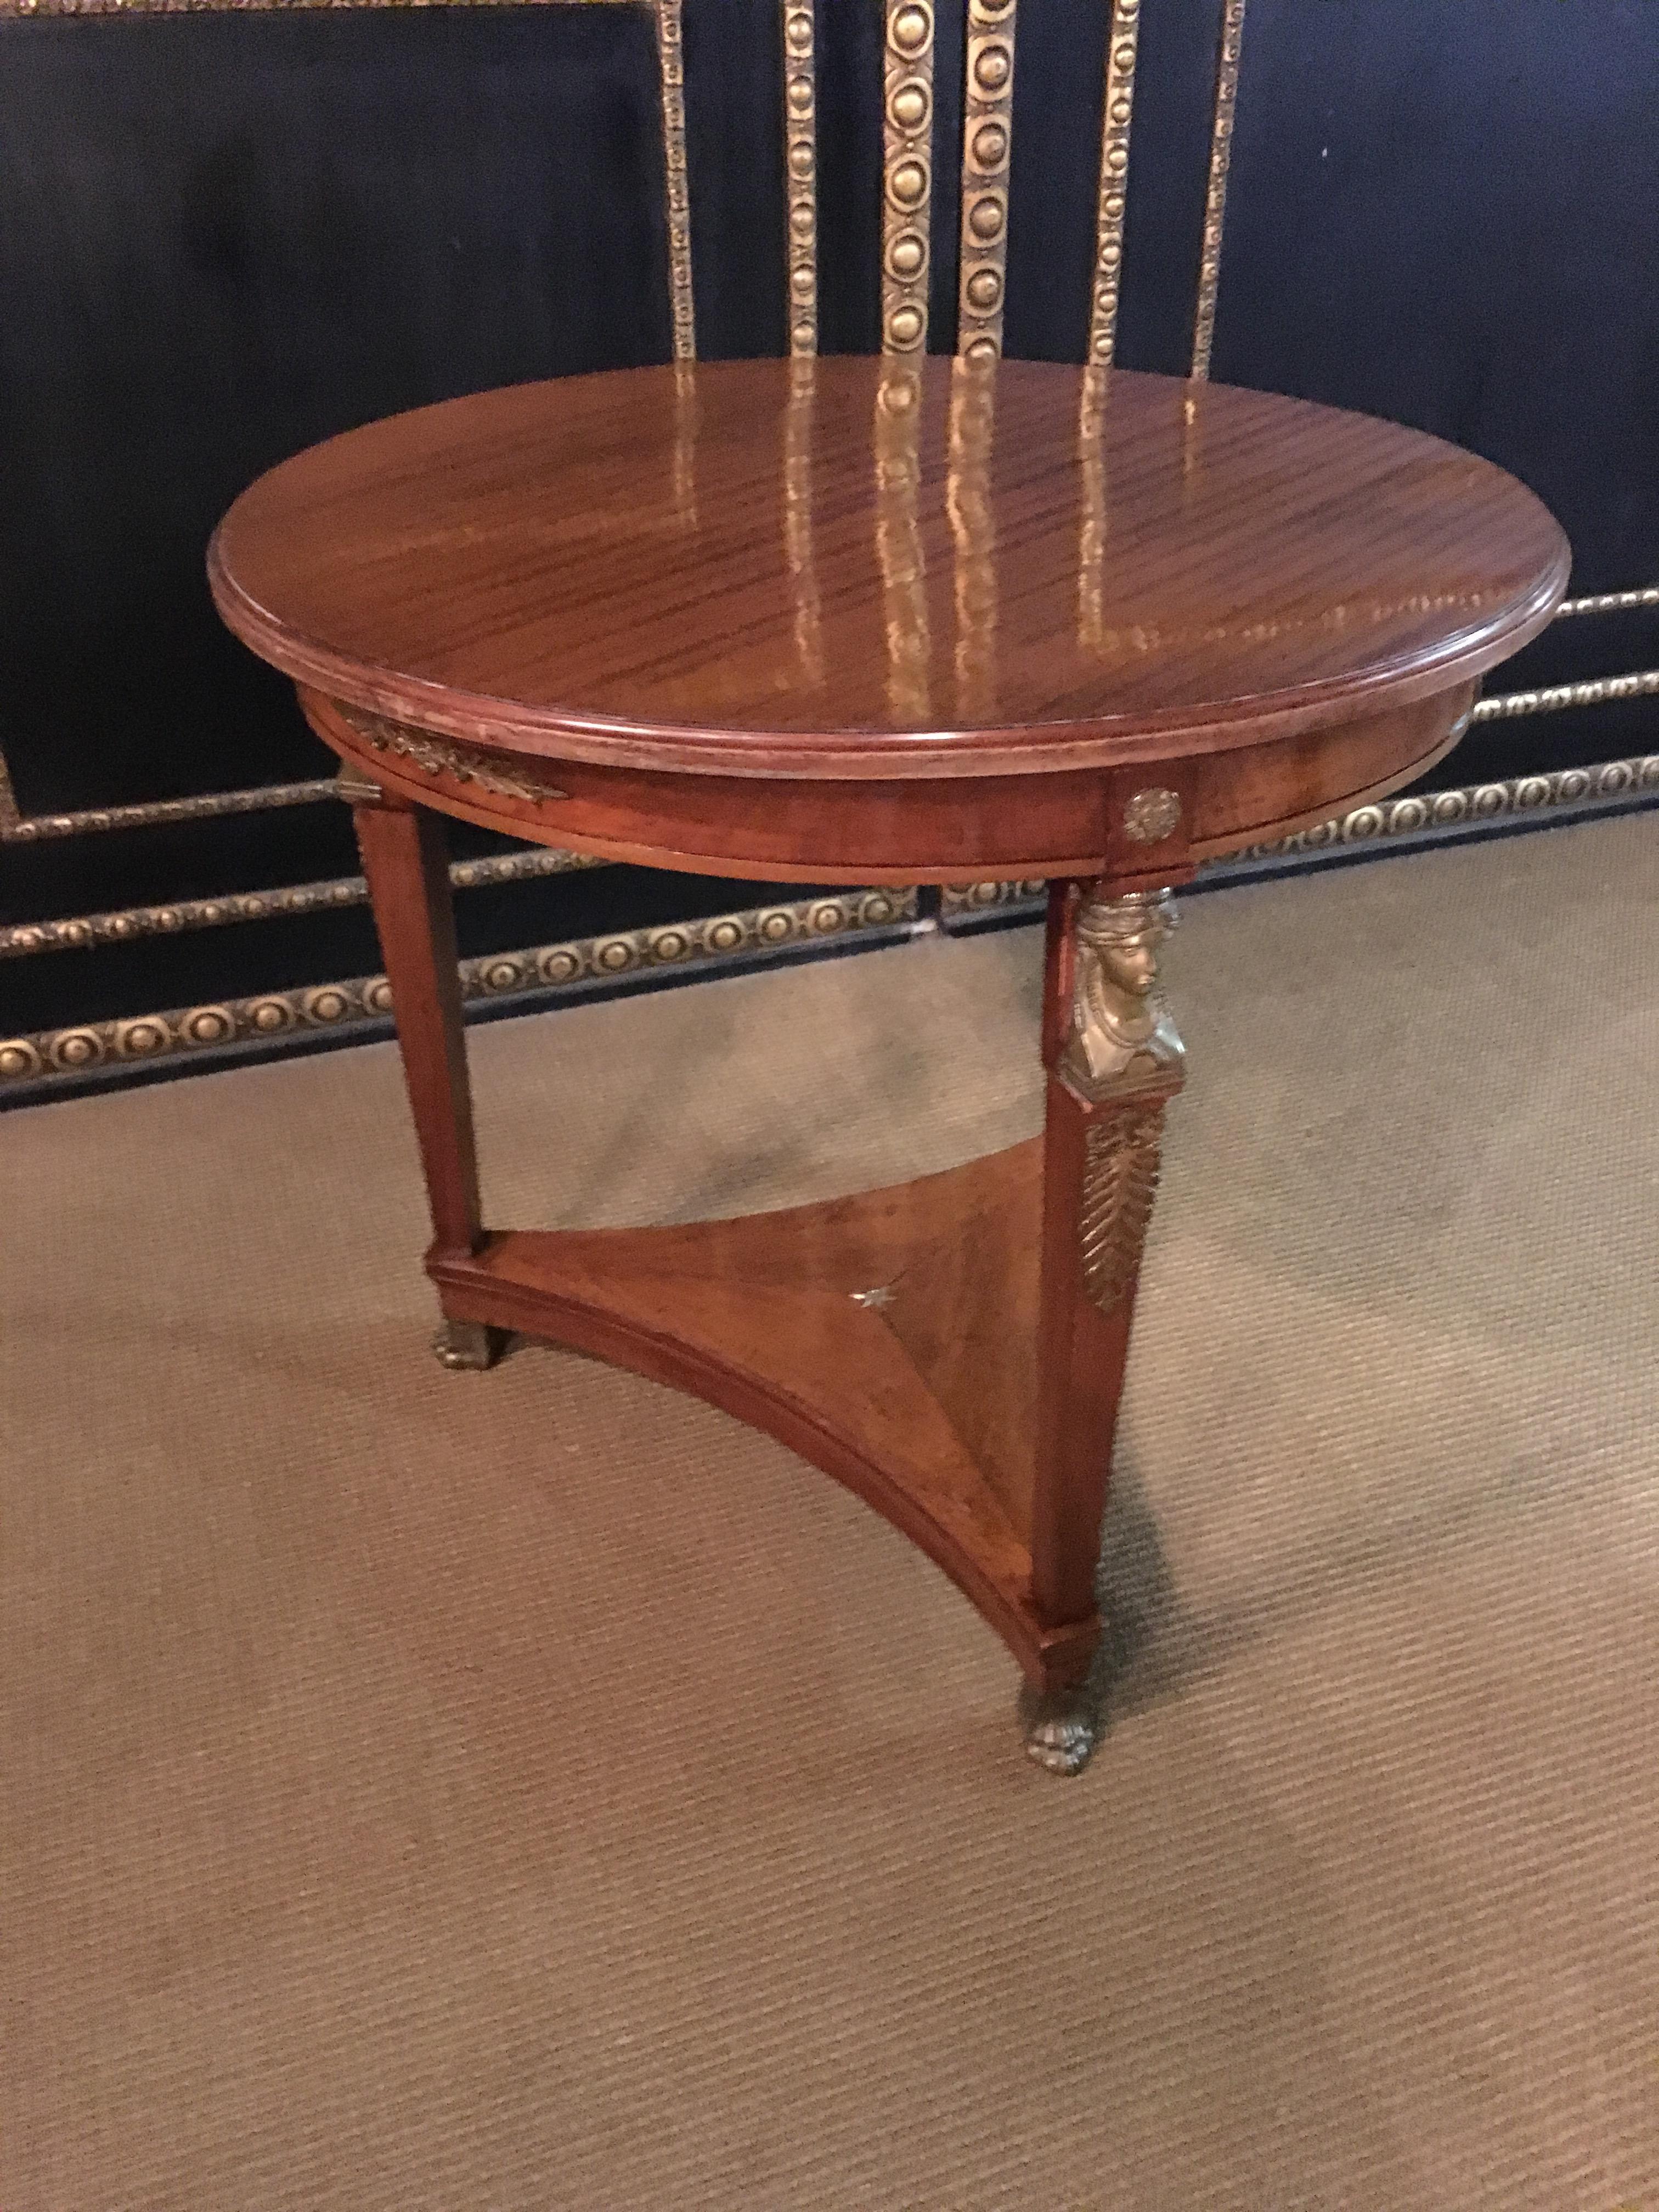 French Original antique Empire Table circa 1860 - 1880 Mahogany veneer bronzed  For Sale